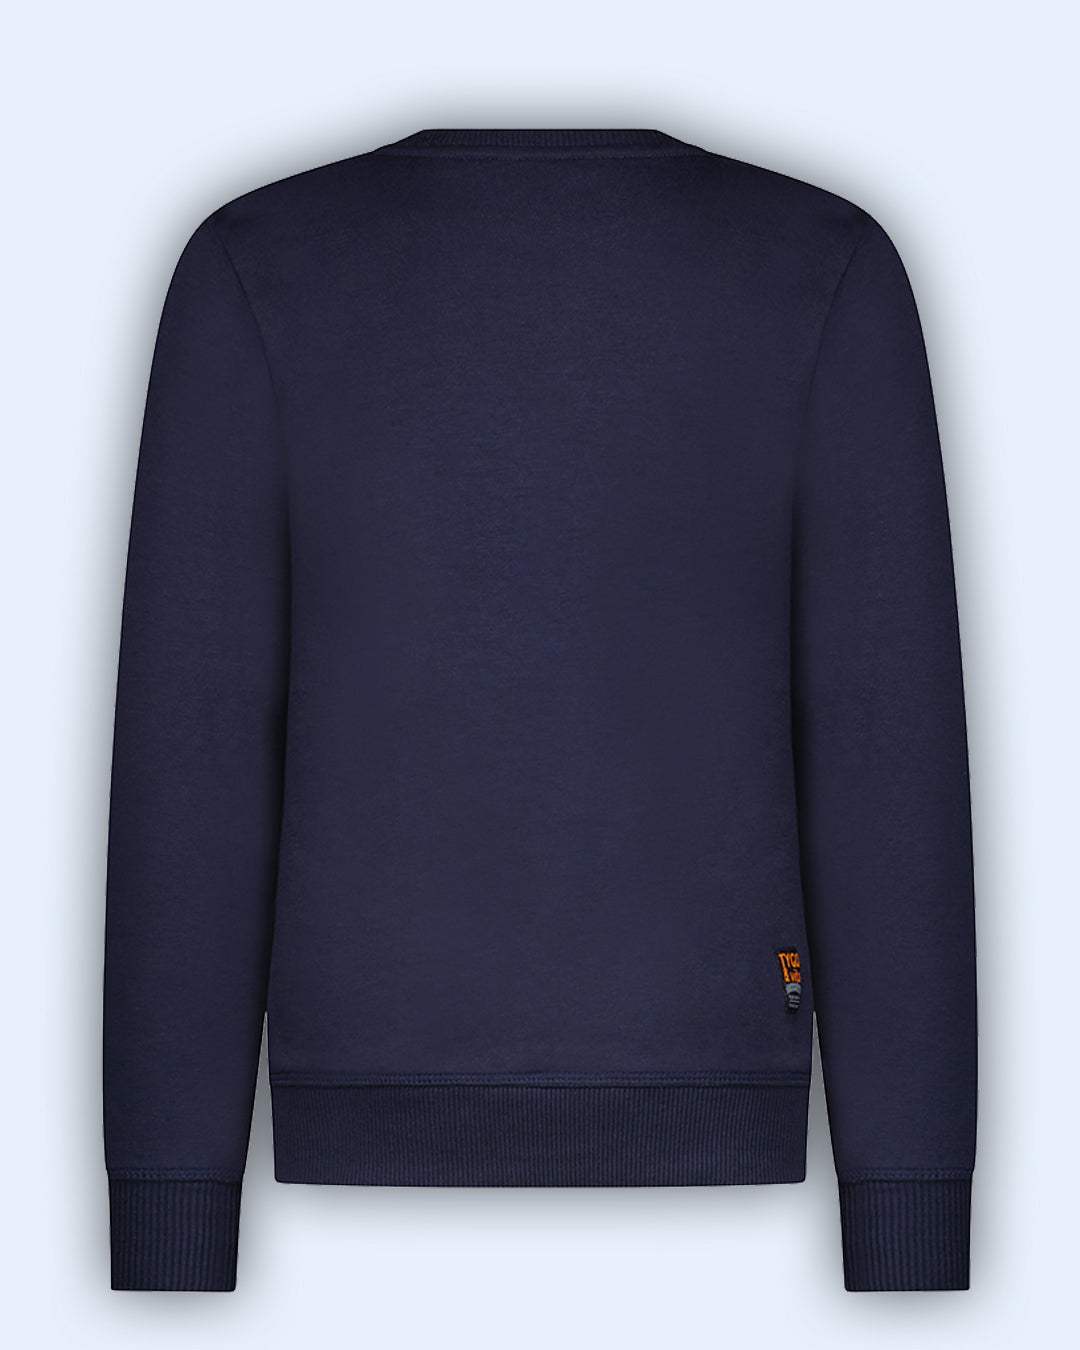 Sweater Tygo donker blauw